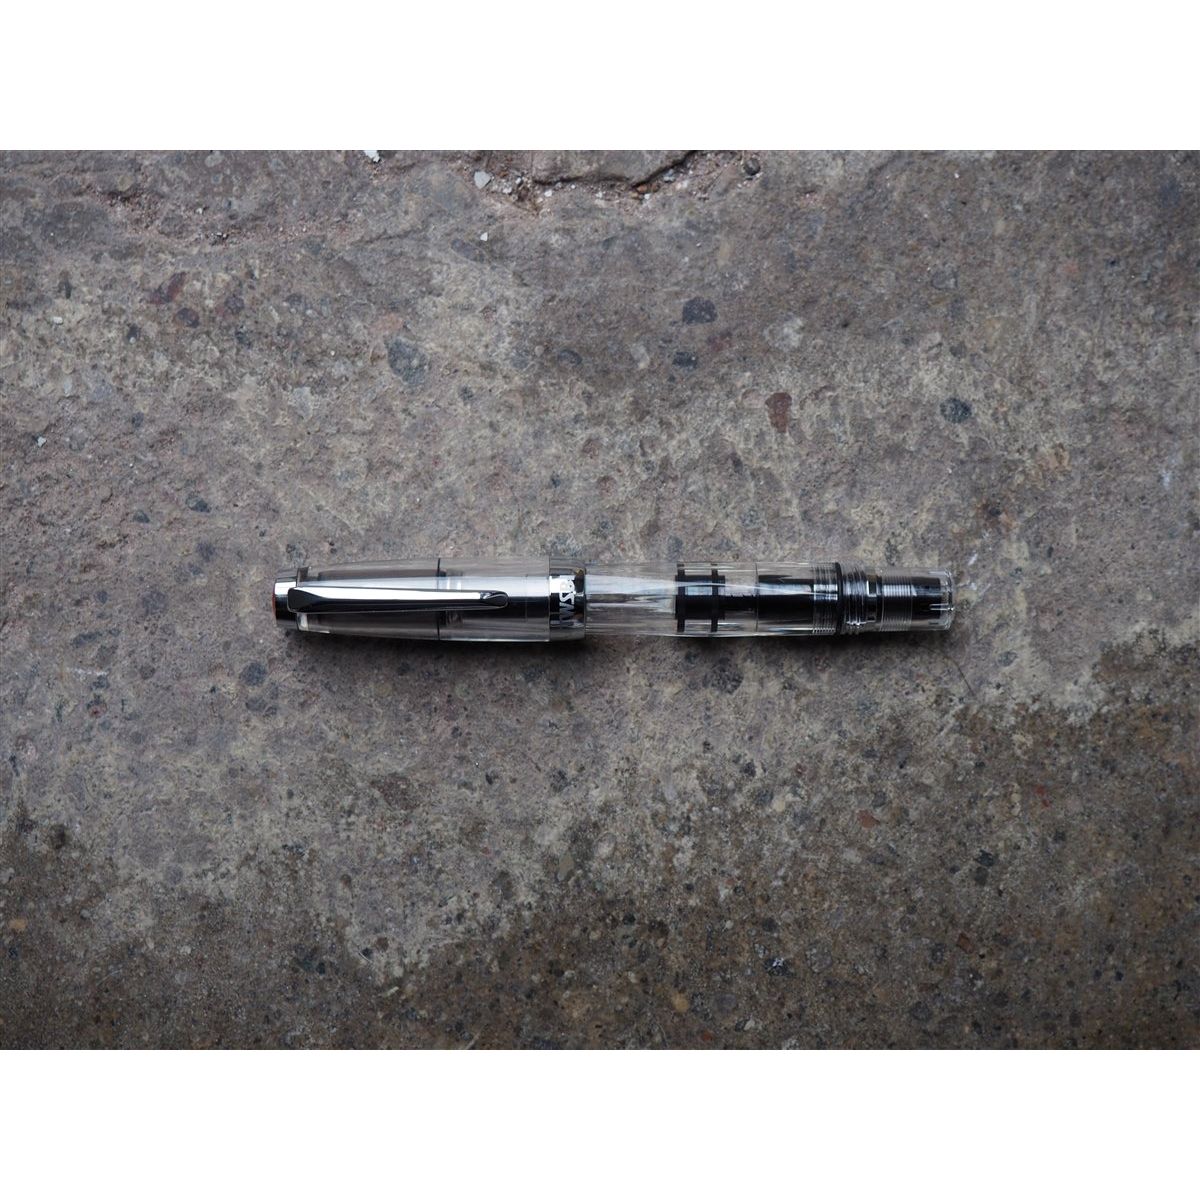 TWSBI DIAMOND MINI FOUNTAIN PEN CLASSIC – Pen & Tool